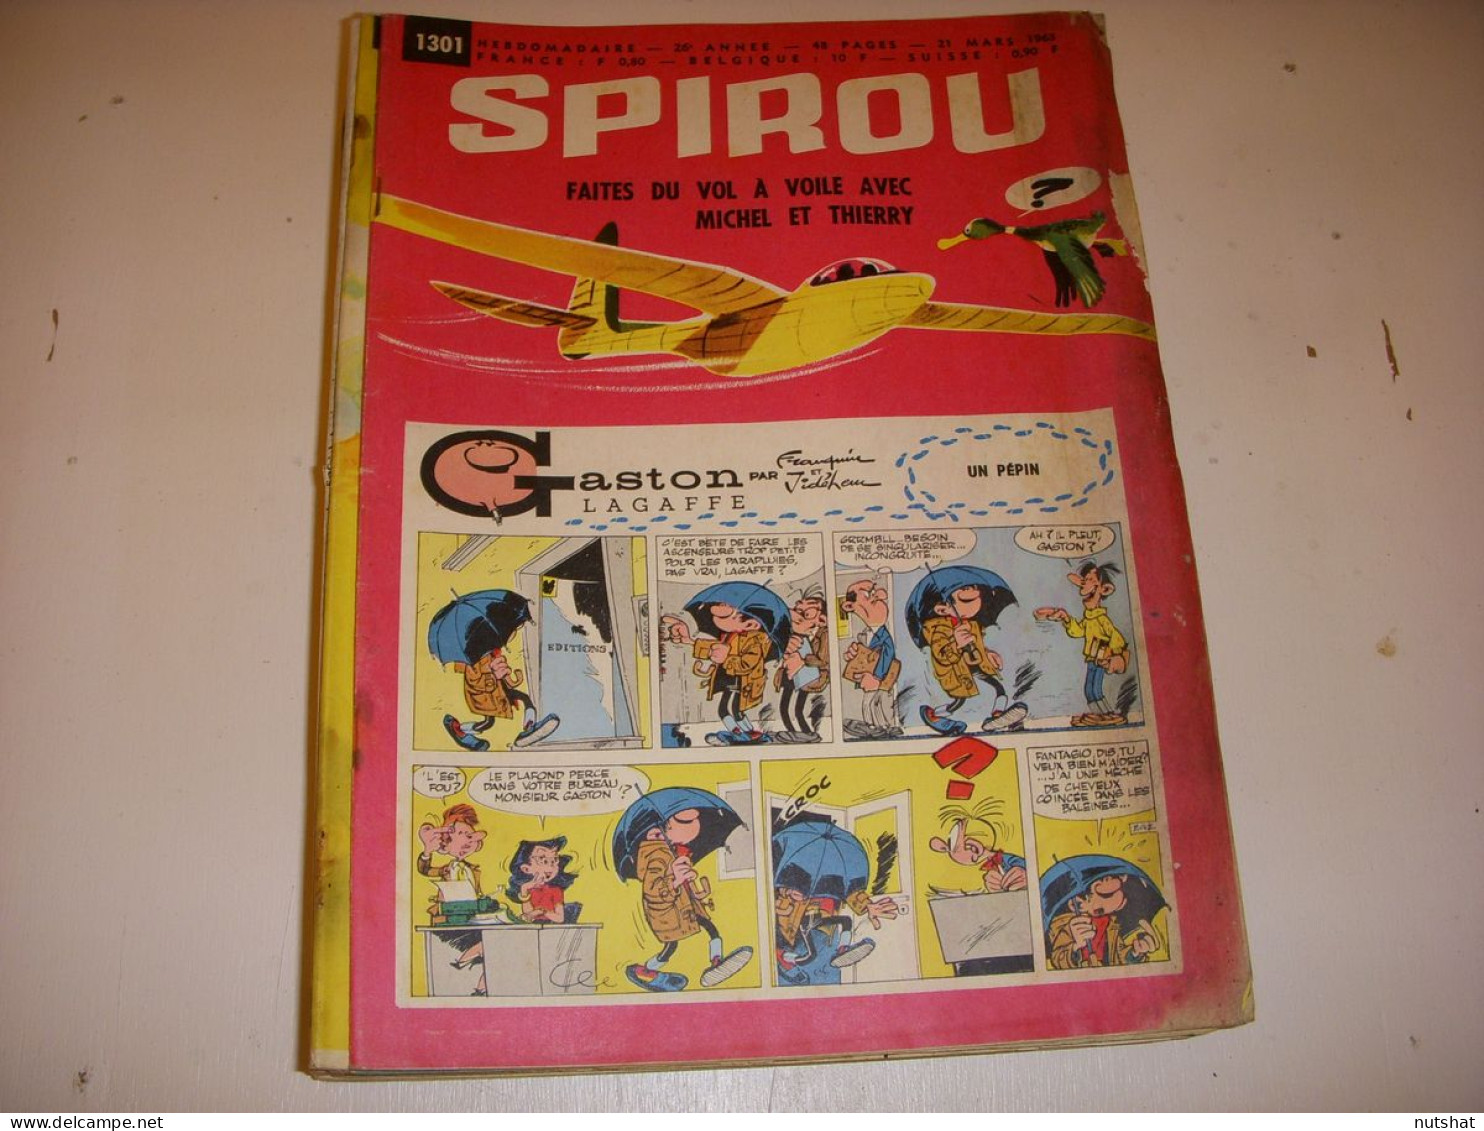 SPIROU 1301 21.03.1963 L'OREAMME AUTO FORD MUSTANG CYCLISME Les CLASSIQUES       - Spirou Magazine